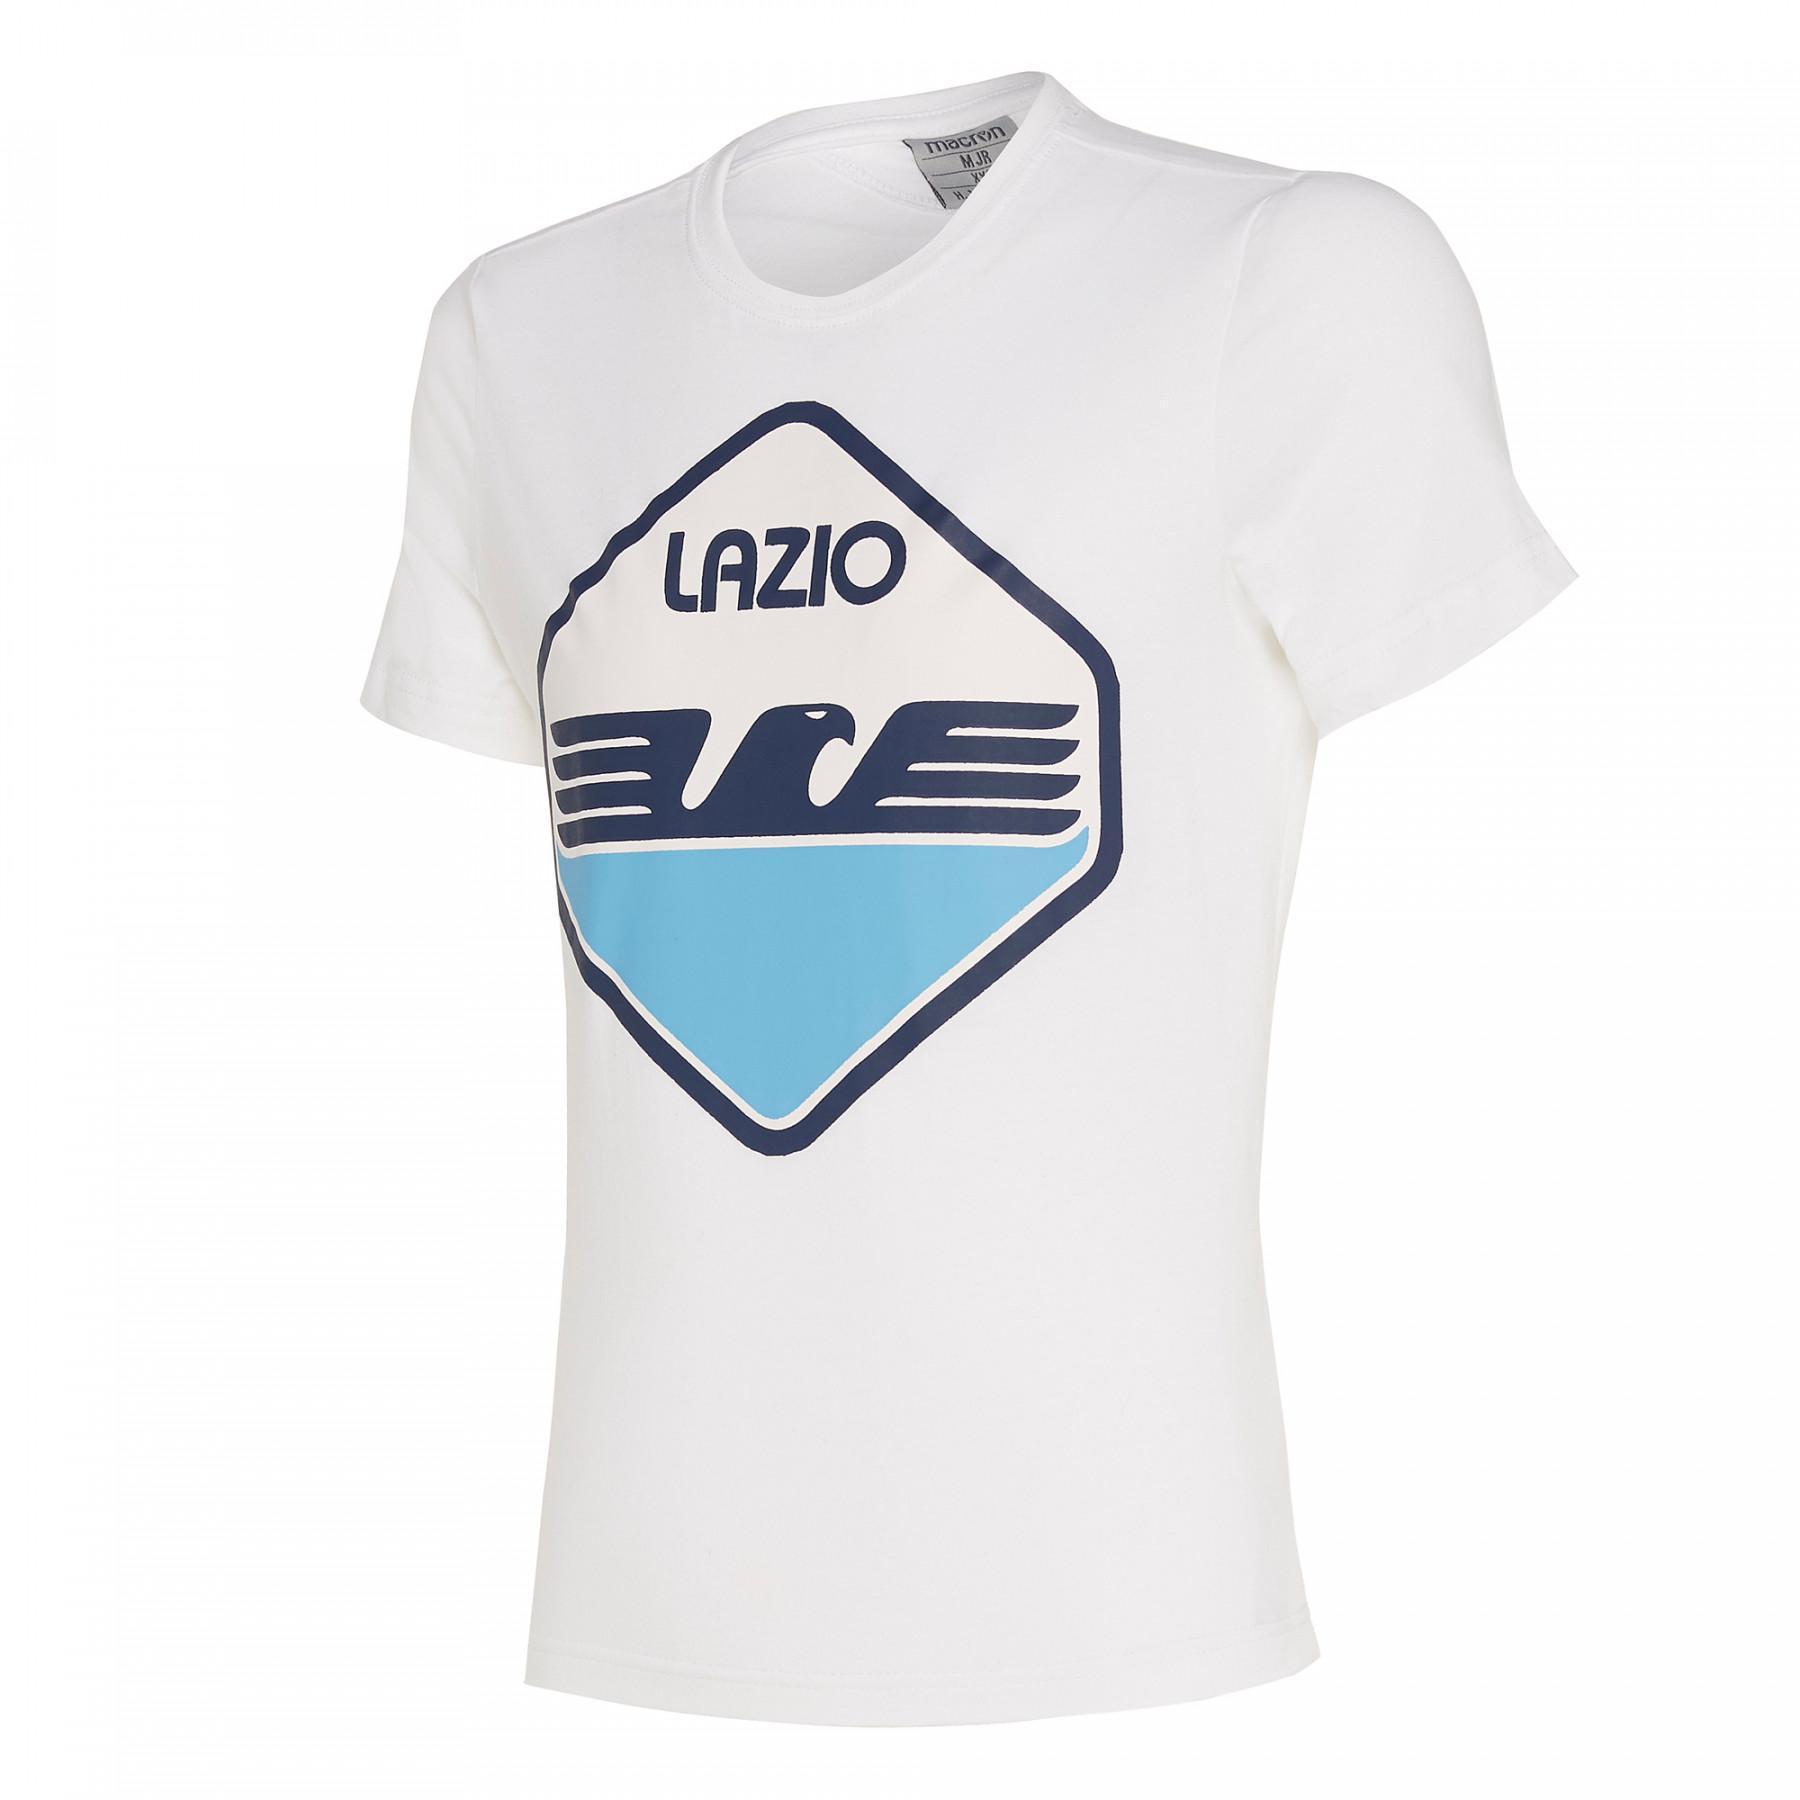 T-shirt criança Lazio Rome Tifoso